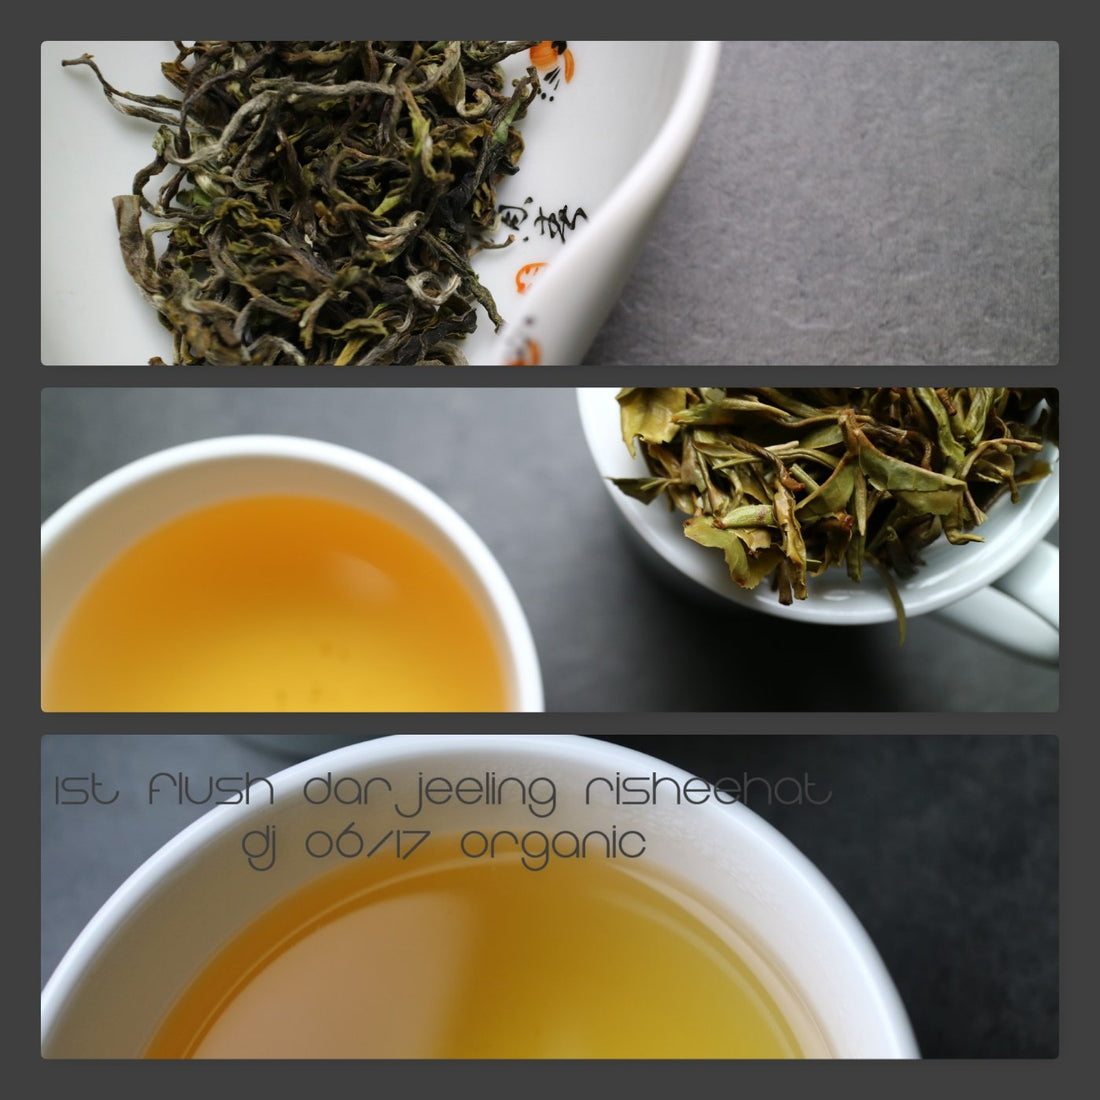 Tea Tasting diary – batch n.232 - She Fang Boutique Tea